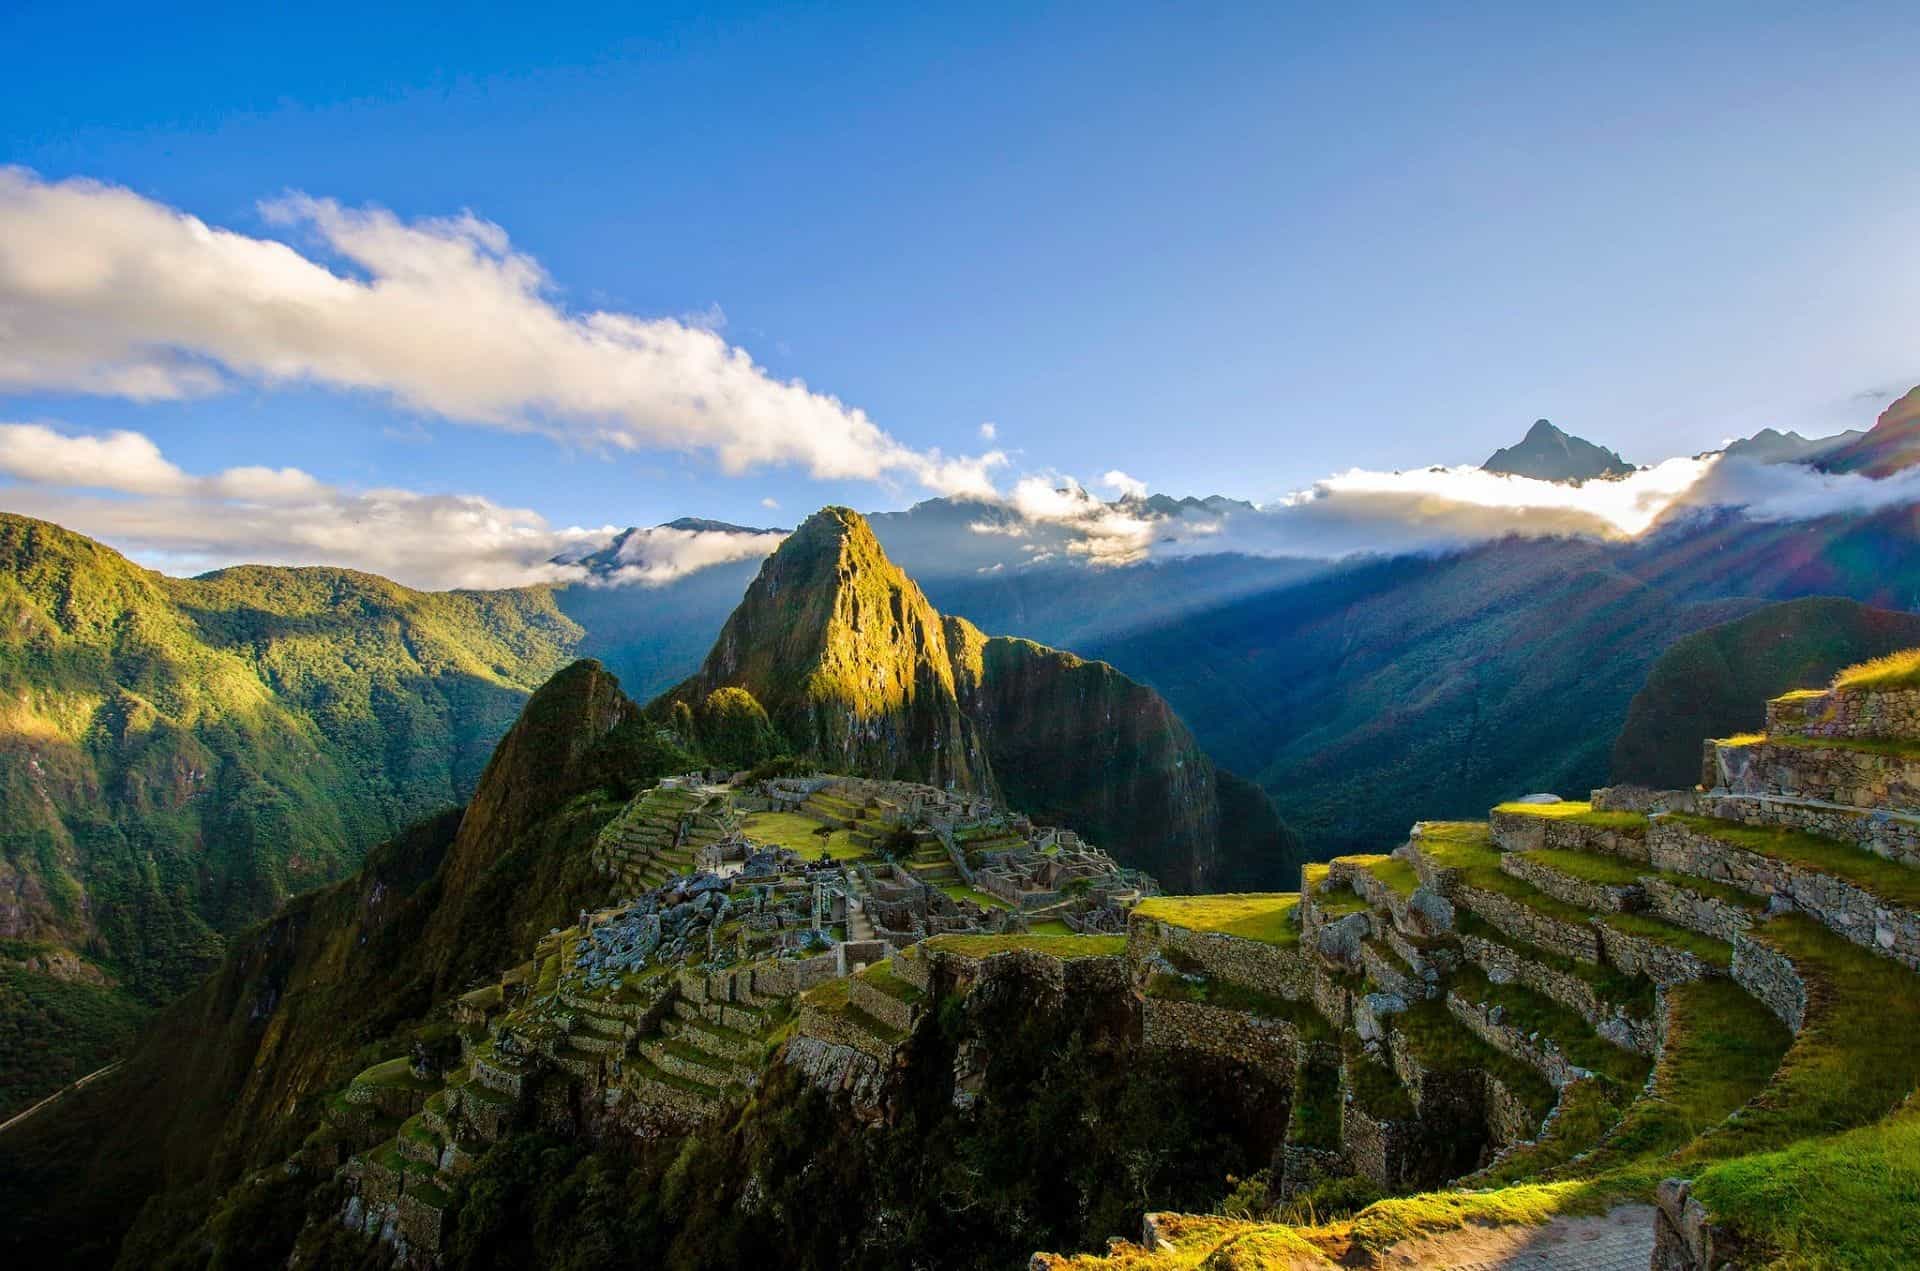 Day 4: Sacred Valley to Machu Picchu